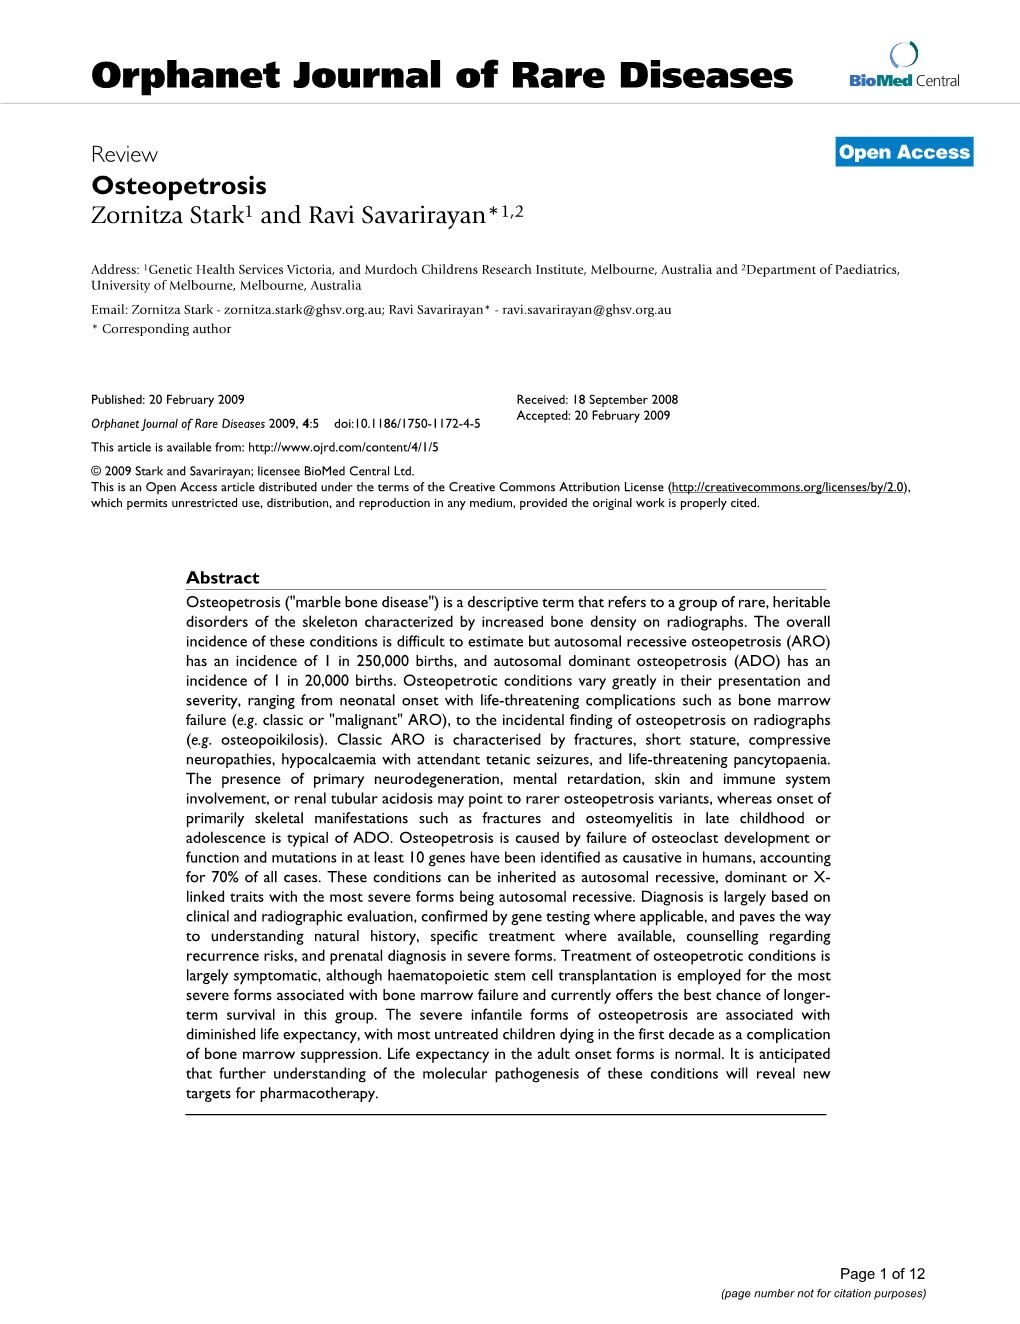 Osteopetrosis Zornitza Stark1 and Ravi Savarirayan*1,2